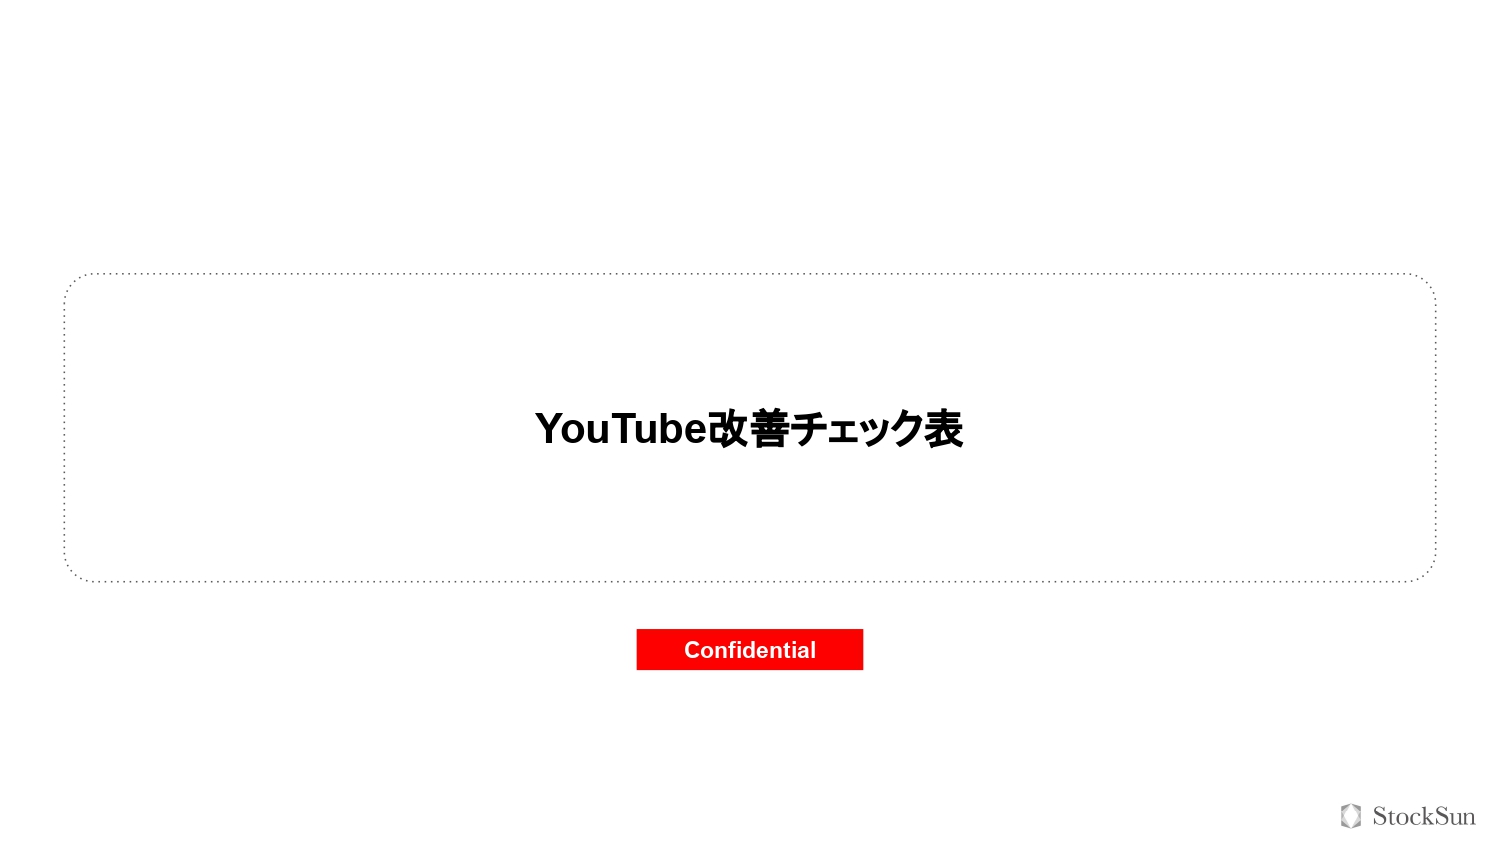 YouTube改善チェック表【柴田章矢】